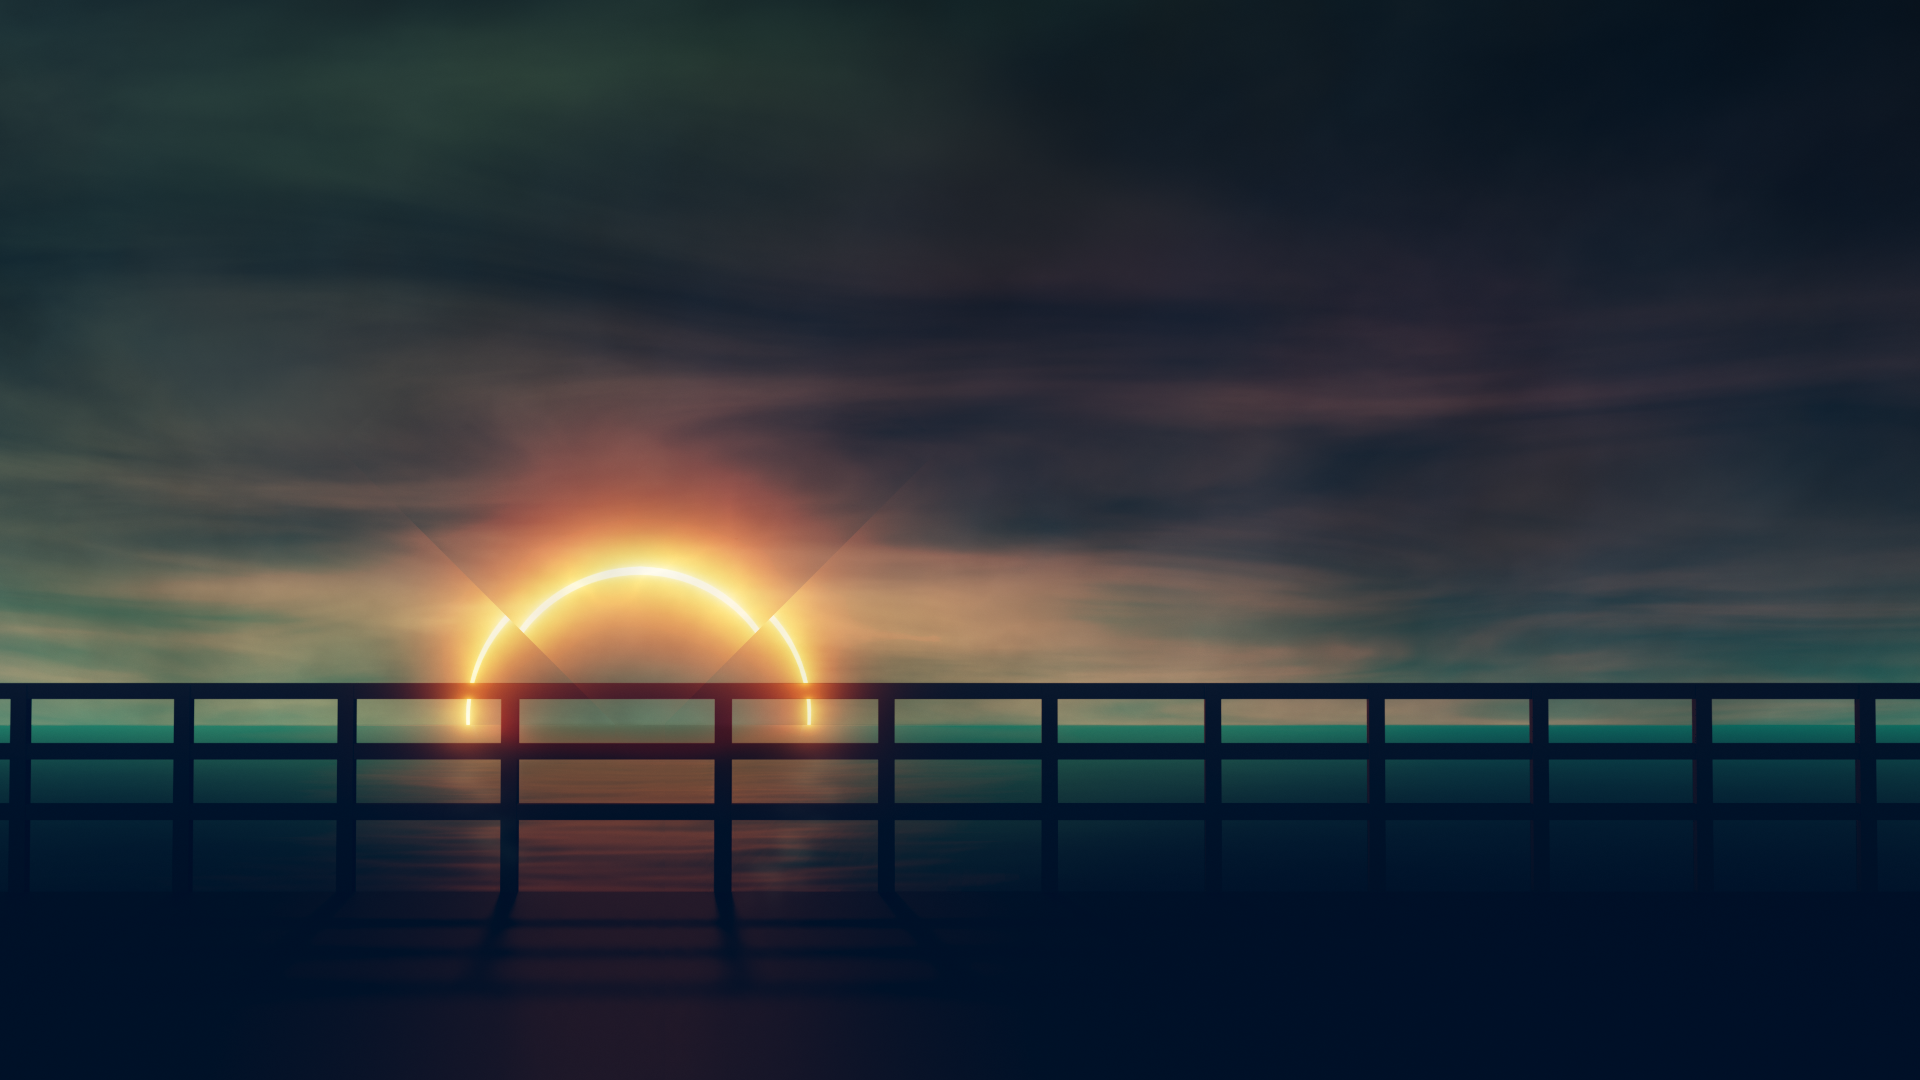 General 1920x1080 minimalism abstract sunset circle glowing pier fence dark broken